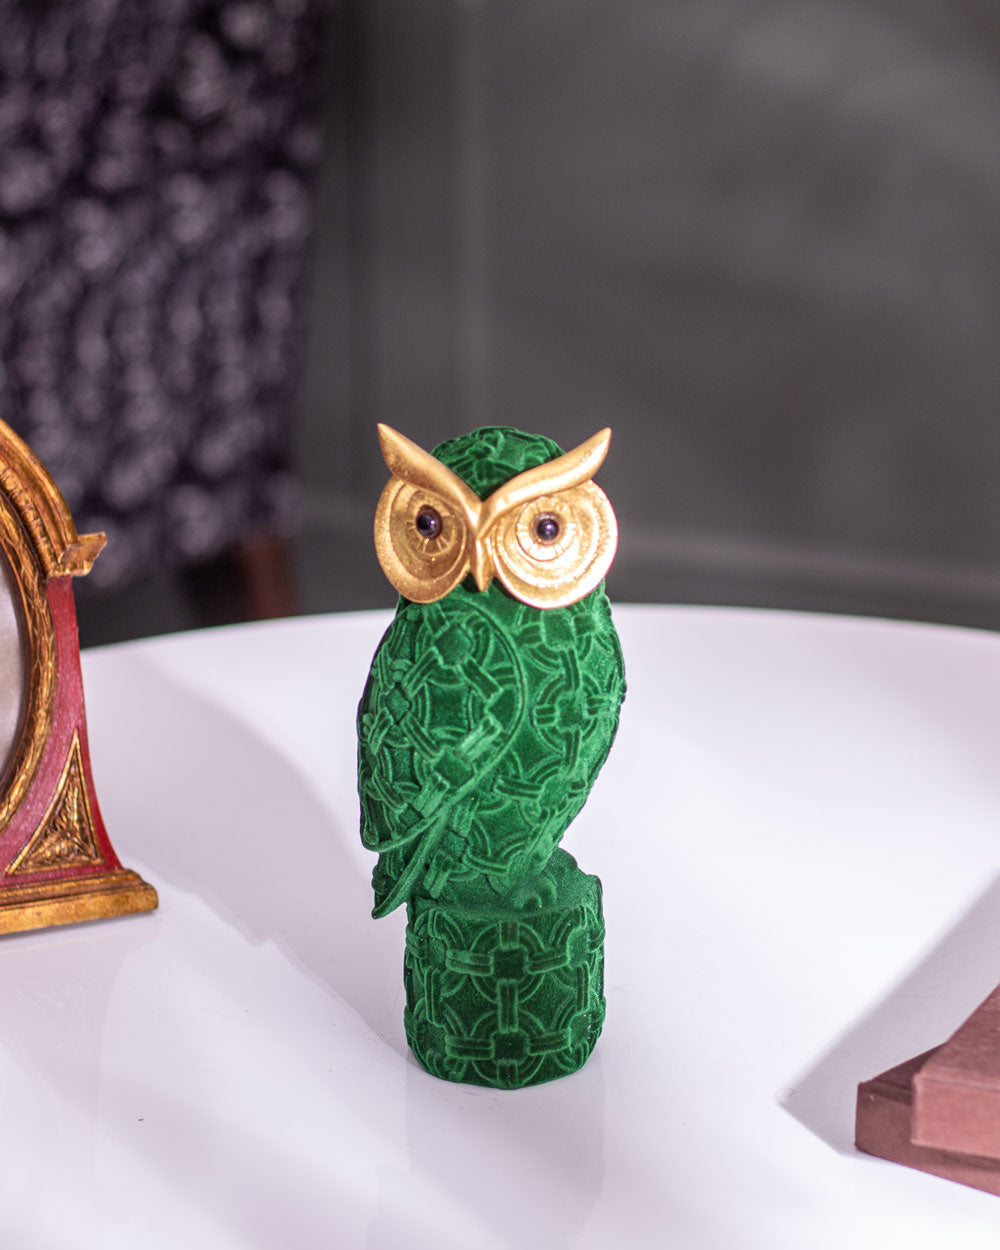 Adorable Owl Figurine - Green